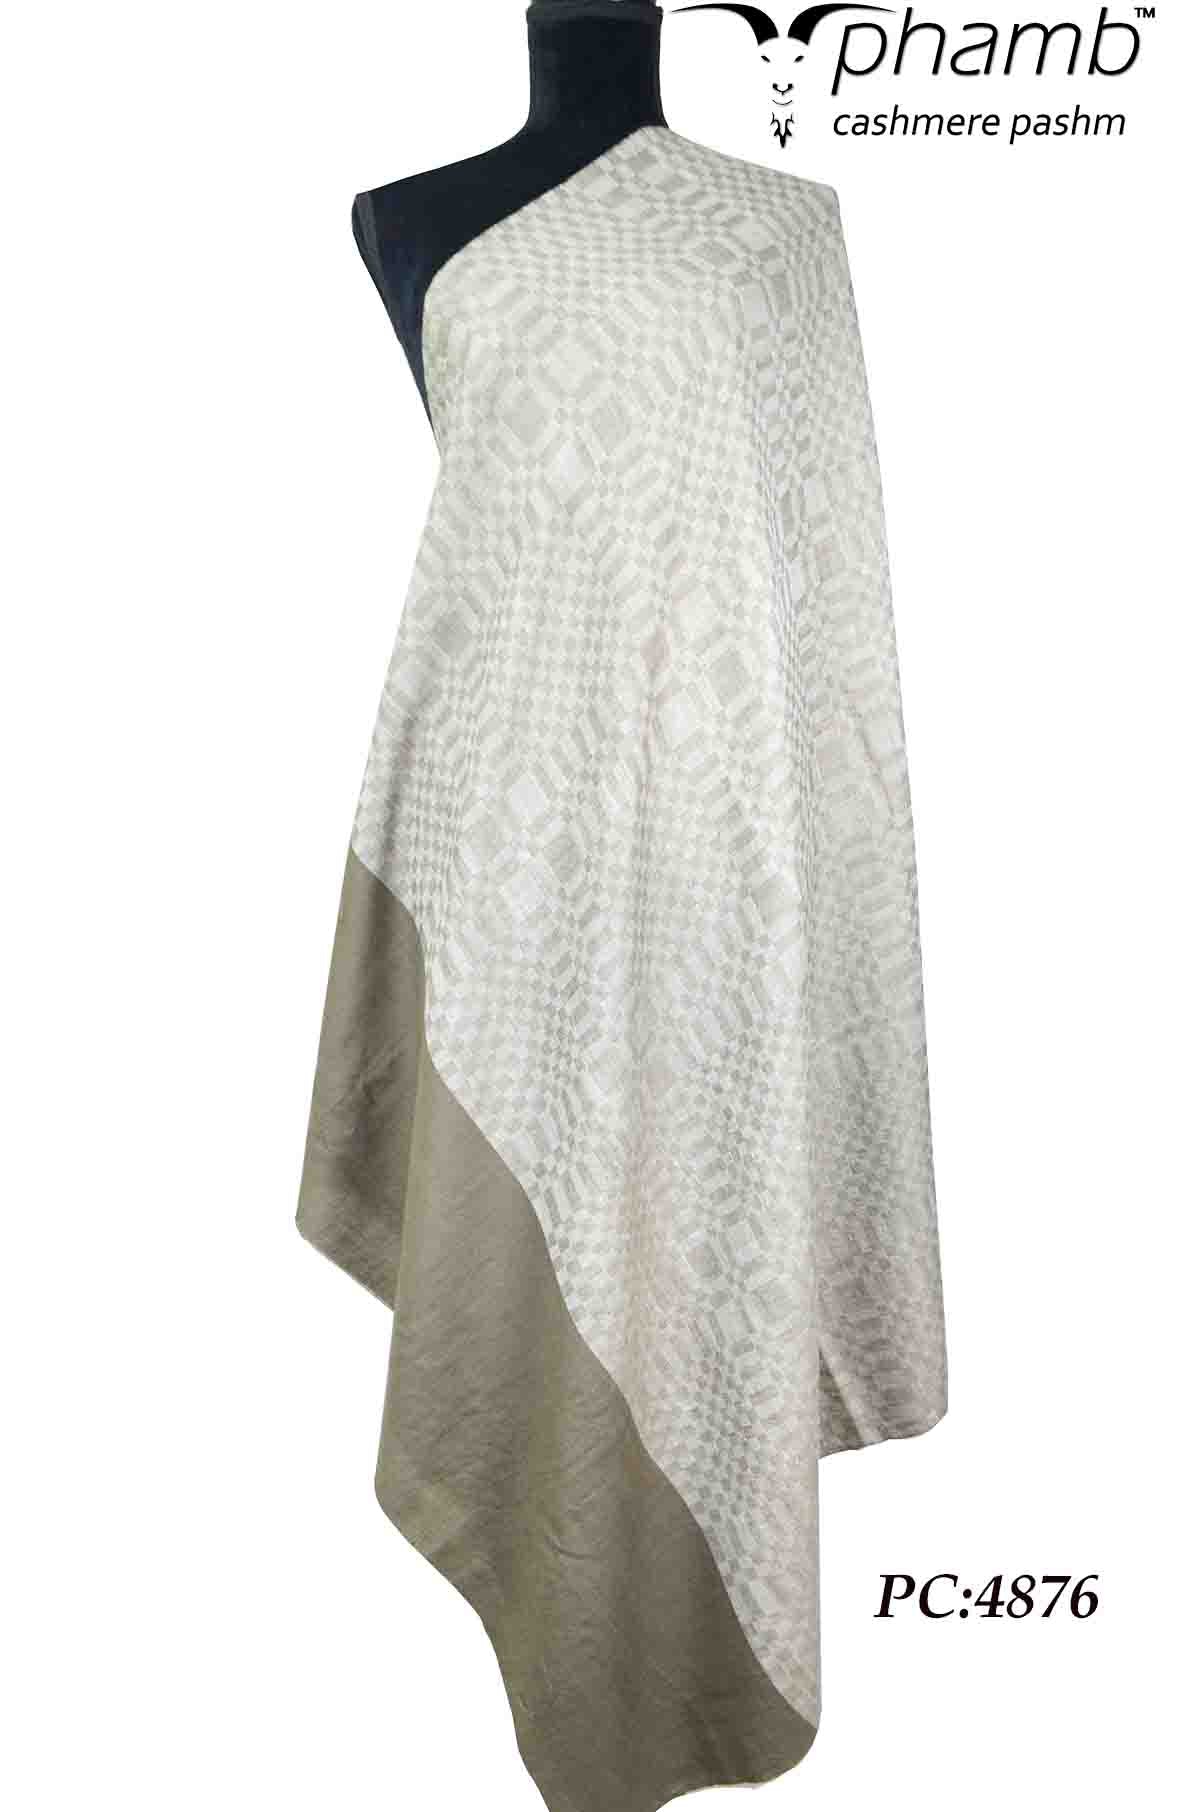 pattern design shawl - 4876